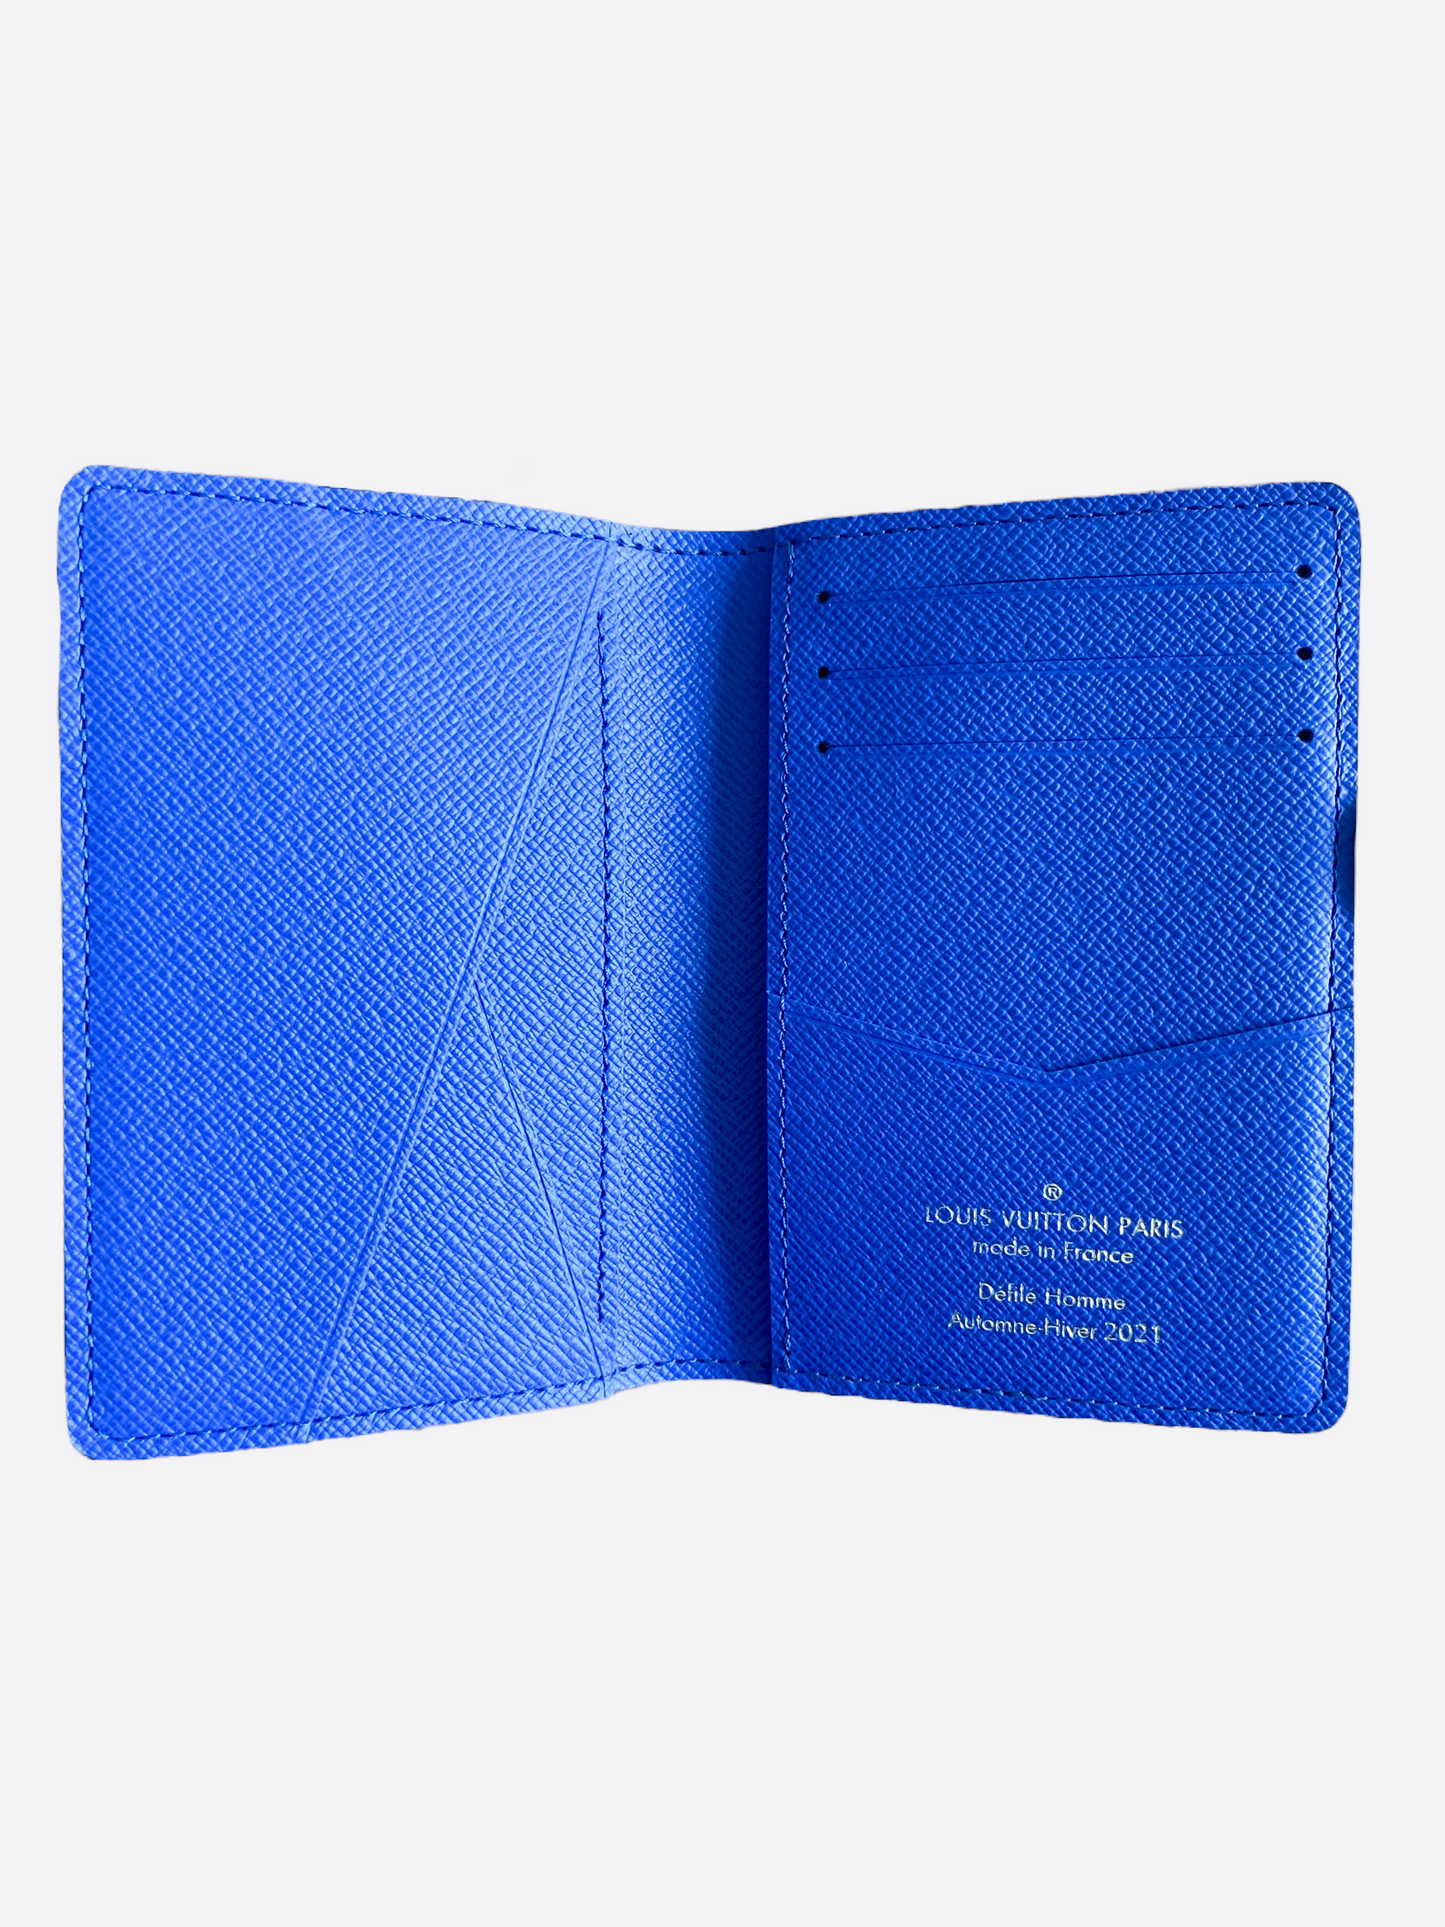 Louis Vuitton Pocket Organizer, Blue, One Size